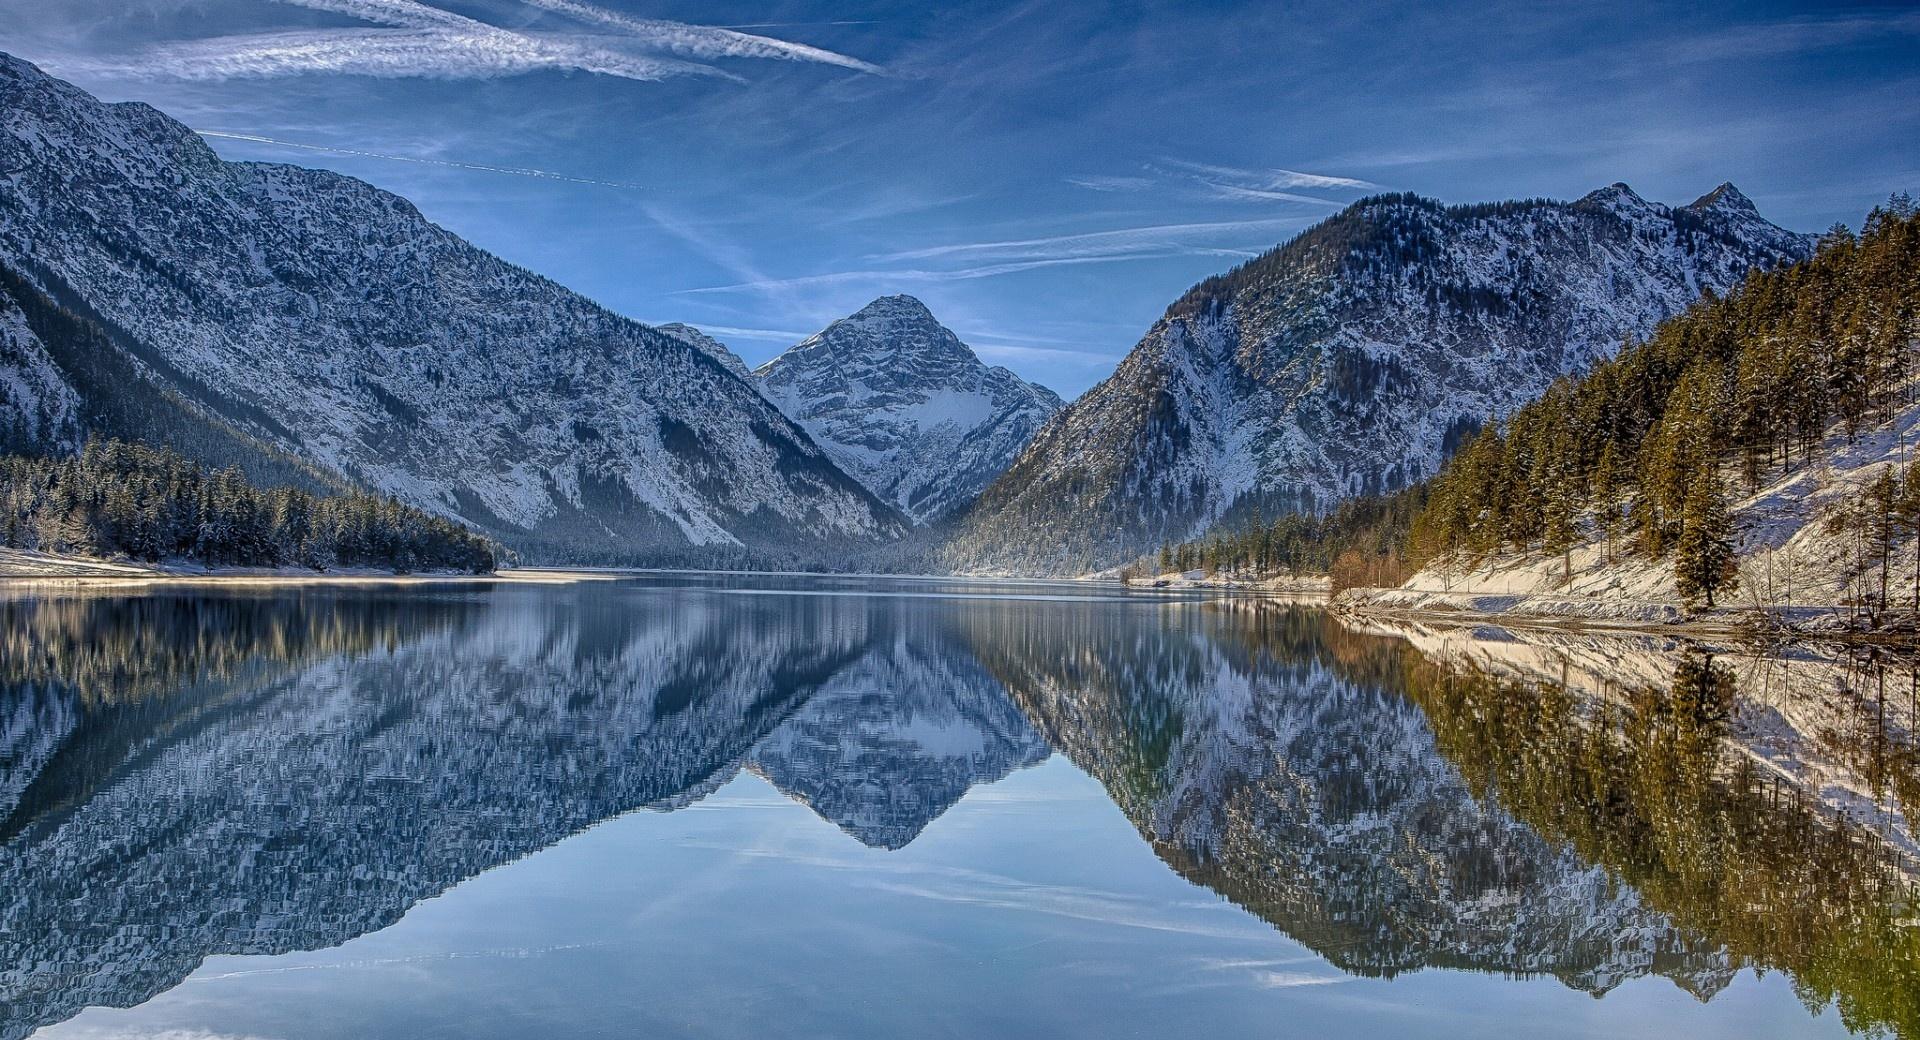 Plansee Lake, Tirol, Austria at 1024 x 1024 iPad size wallpapers HD quality